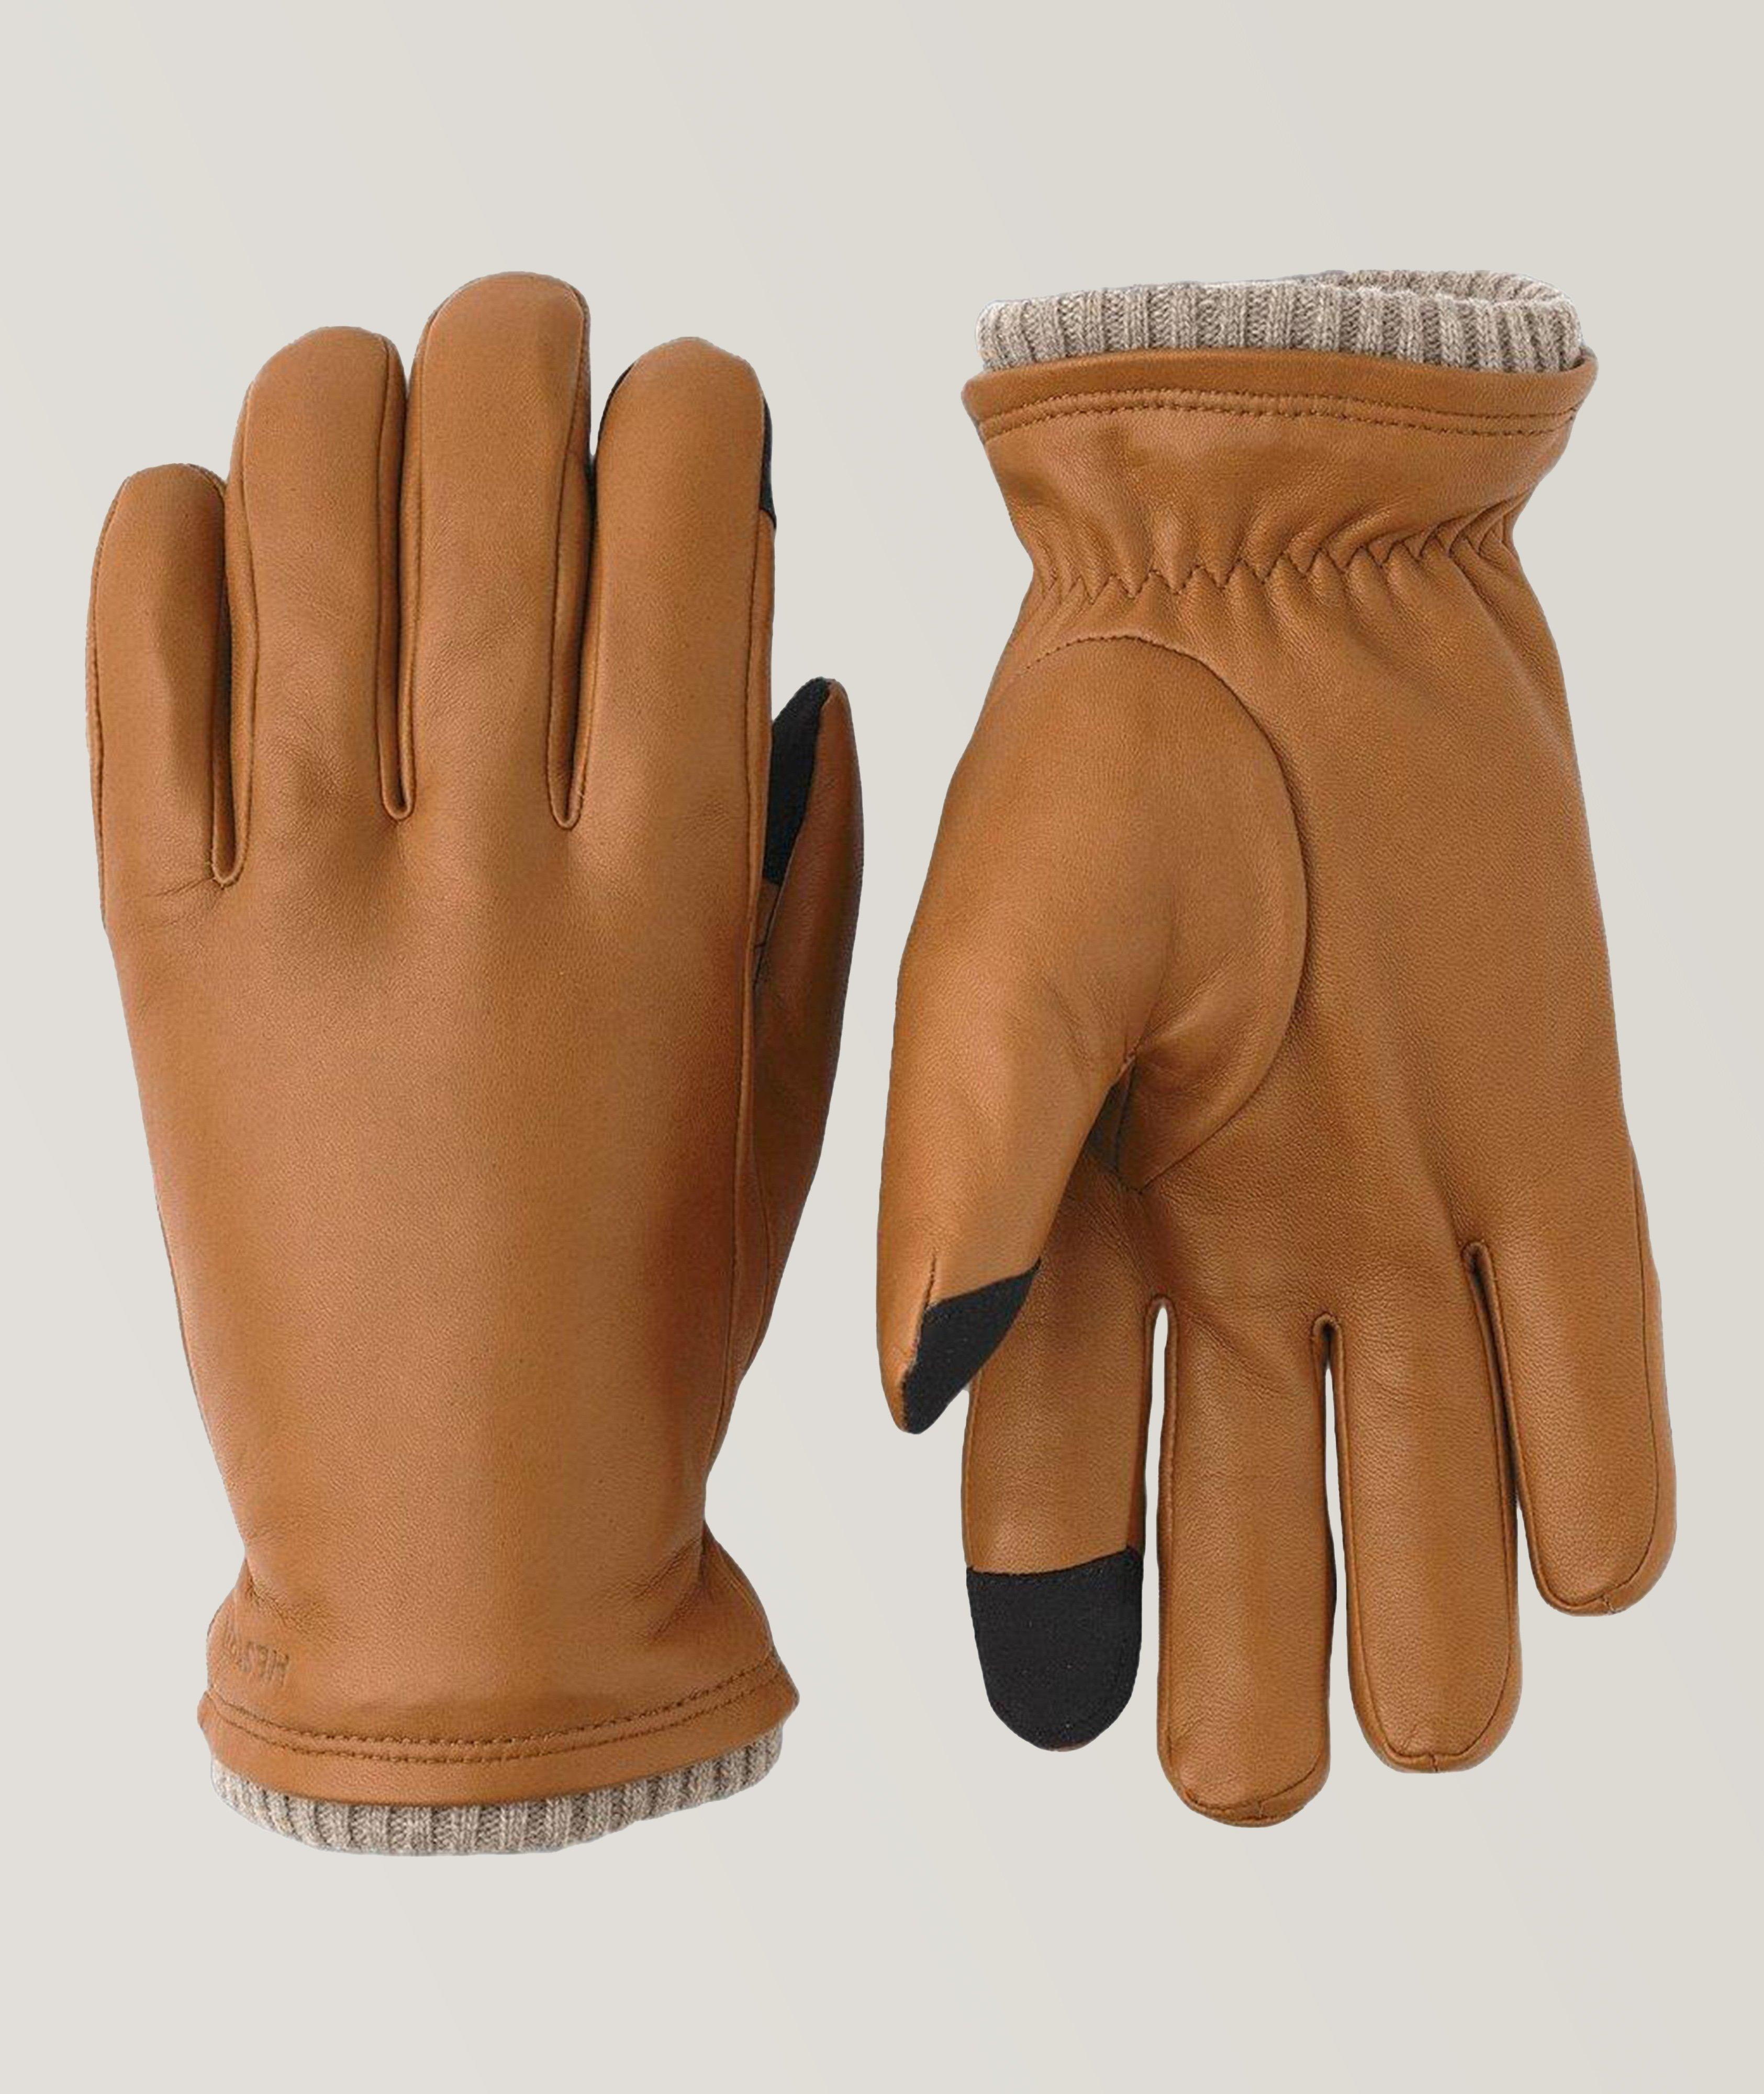 John Touchscreen-Compatible Hairsheep Gloves